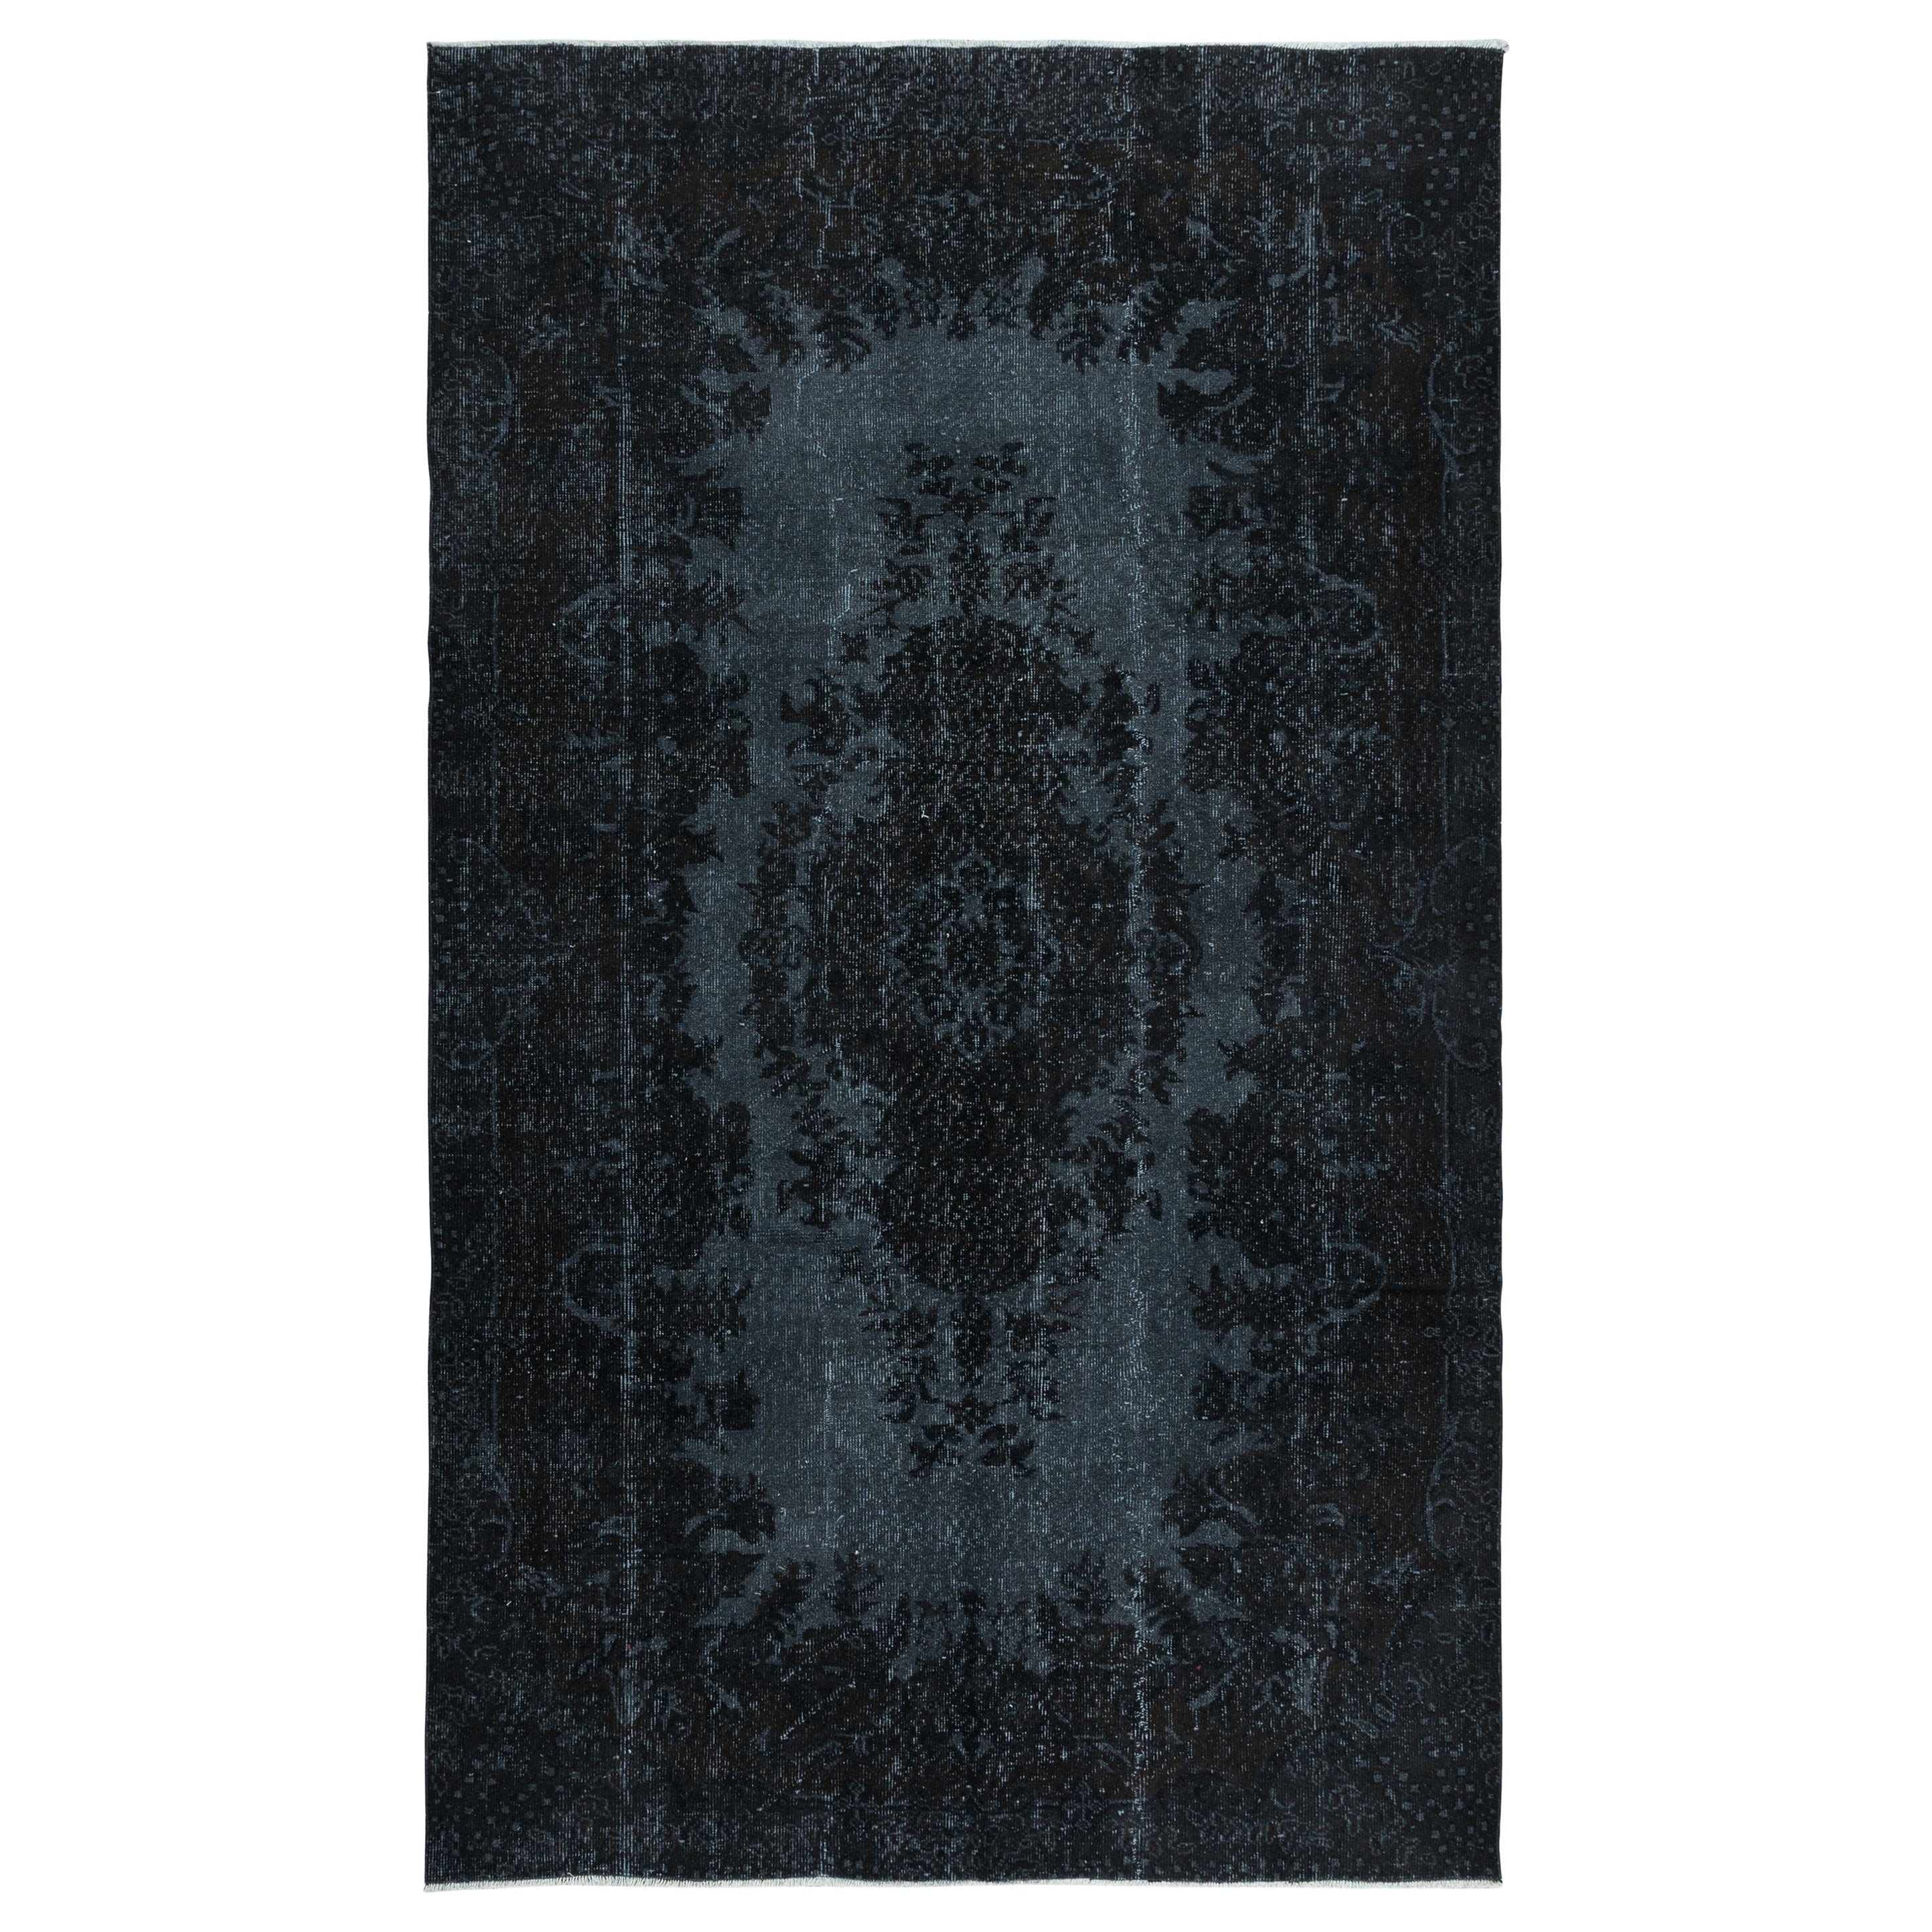 5.5x9 Ft Handmade Area Rug in Black with Medallion, Modern Turkish Carpet